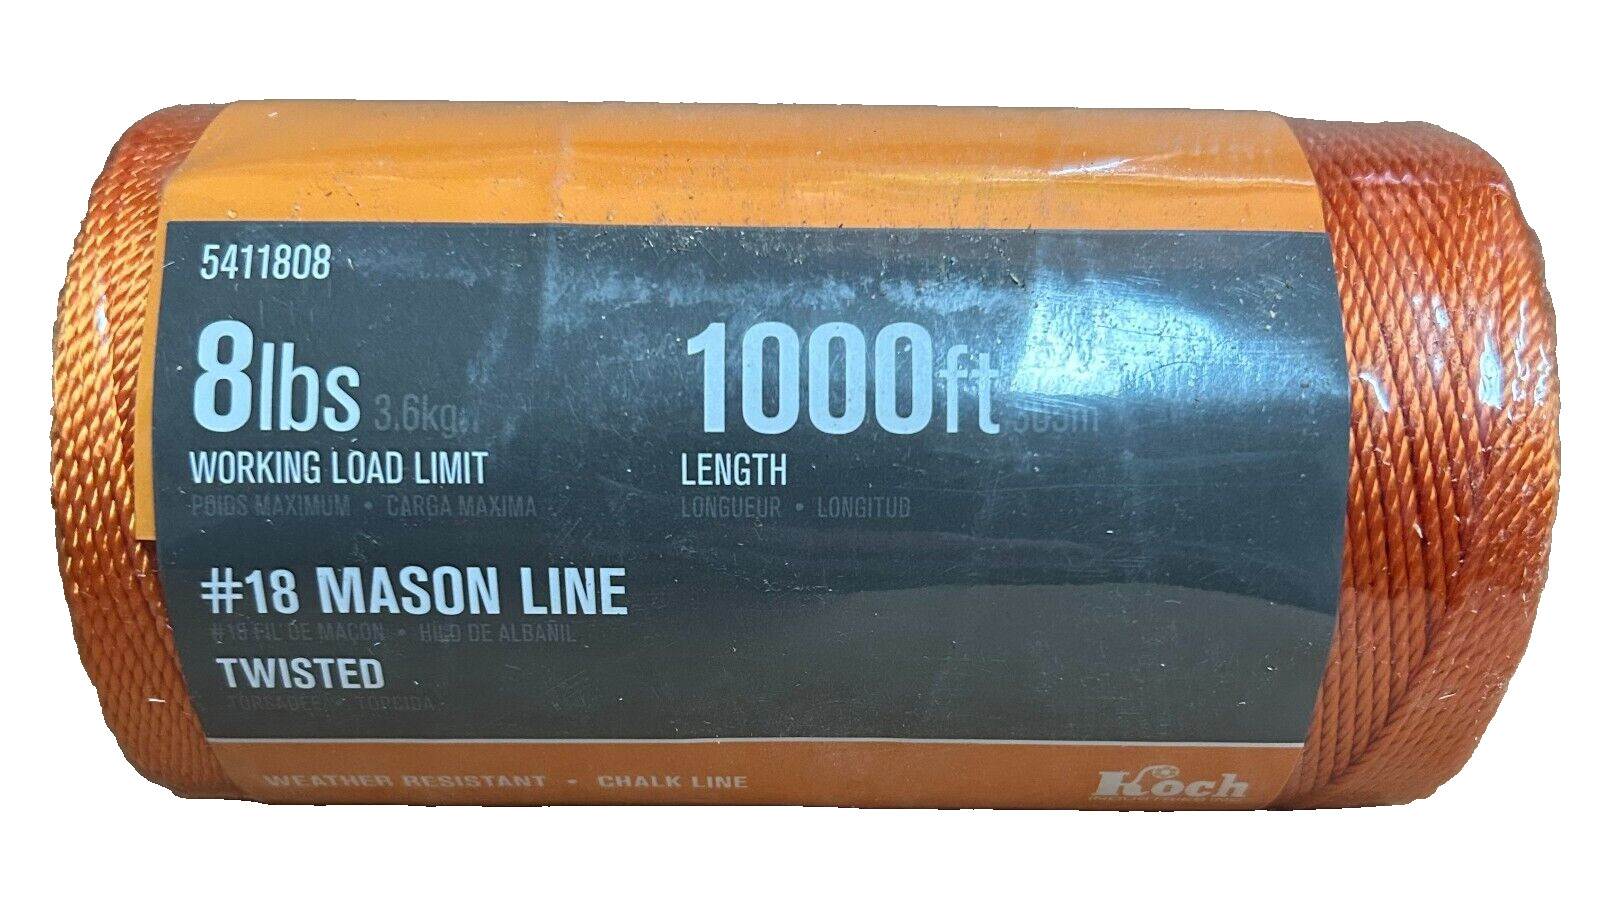 NEW 1000 FT #18 Mason Line Twisted Rope Cord Chalk Seine Twine String Orange 8lb